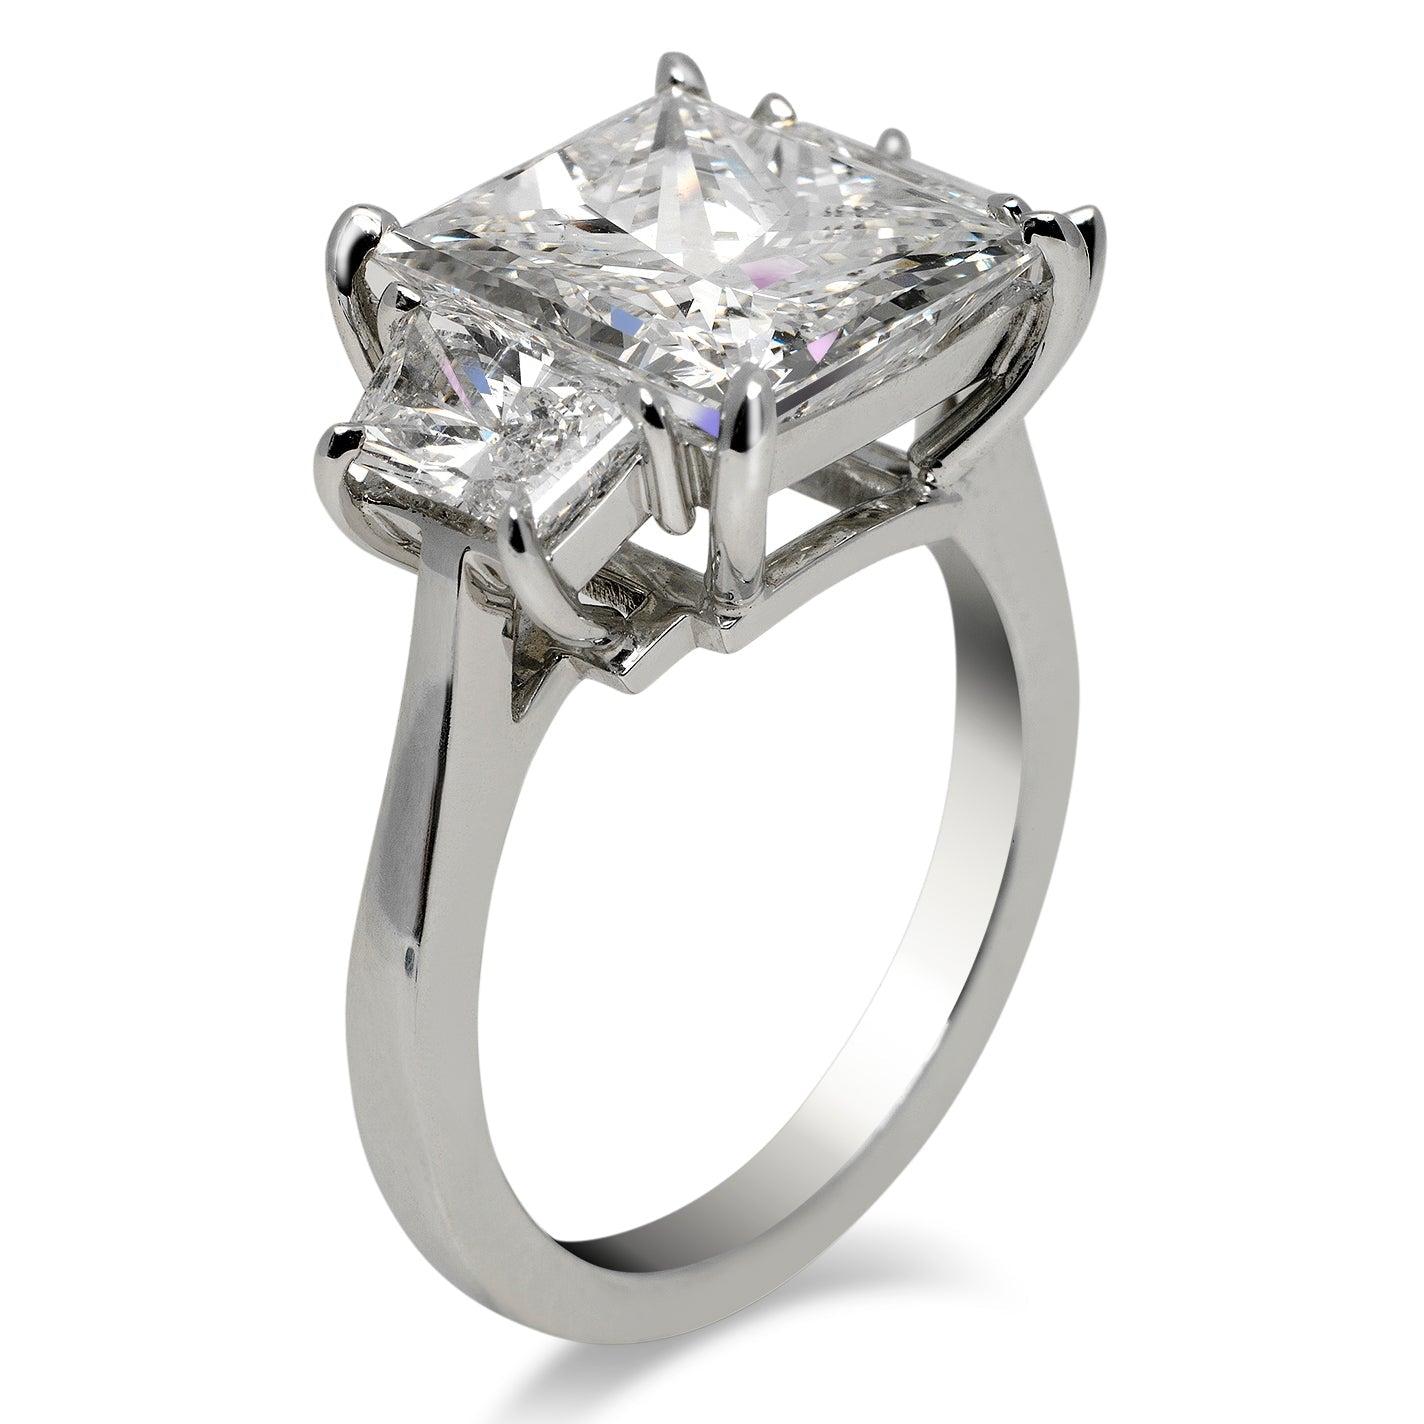 6 carat princess cut diamond ring